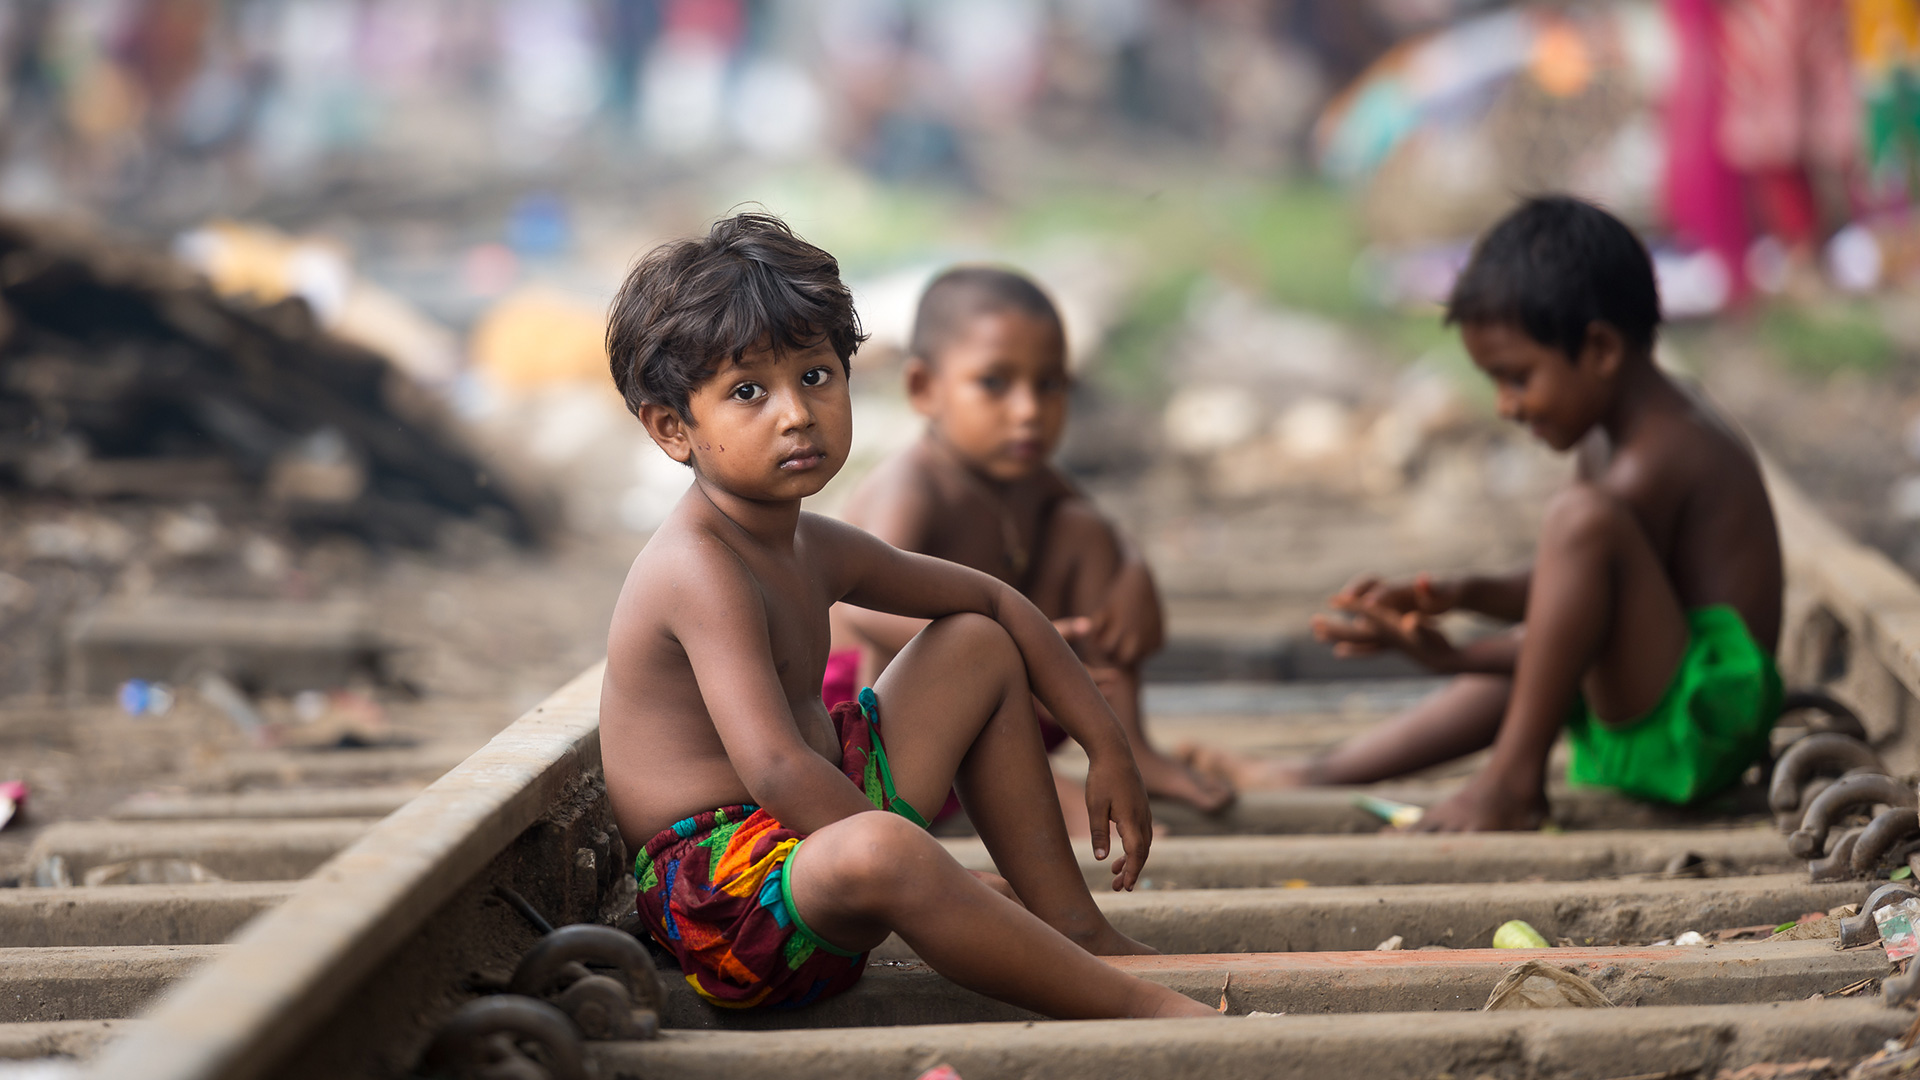 Thousands of Bangladeshis live along the railroad tracks.